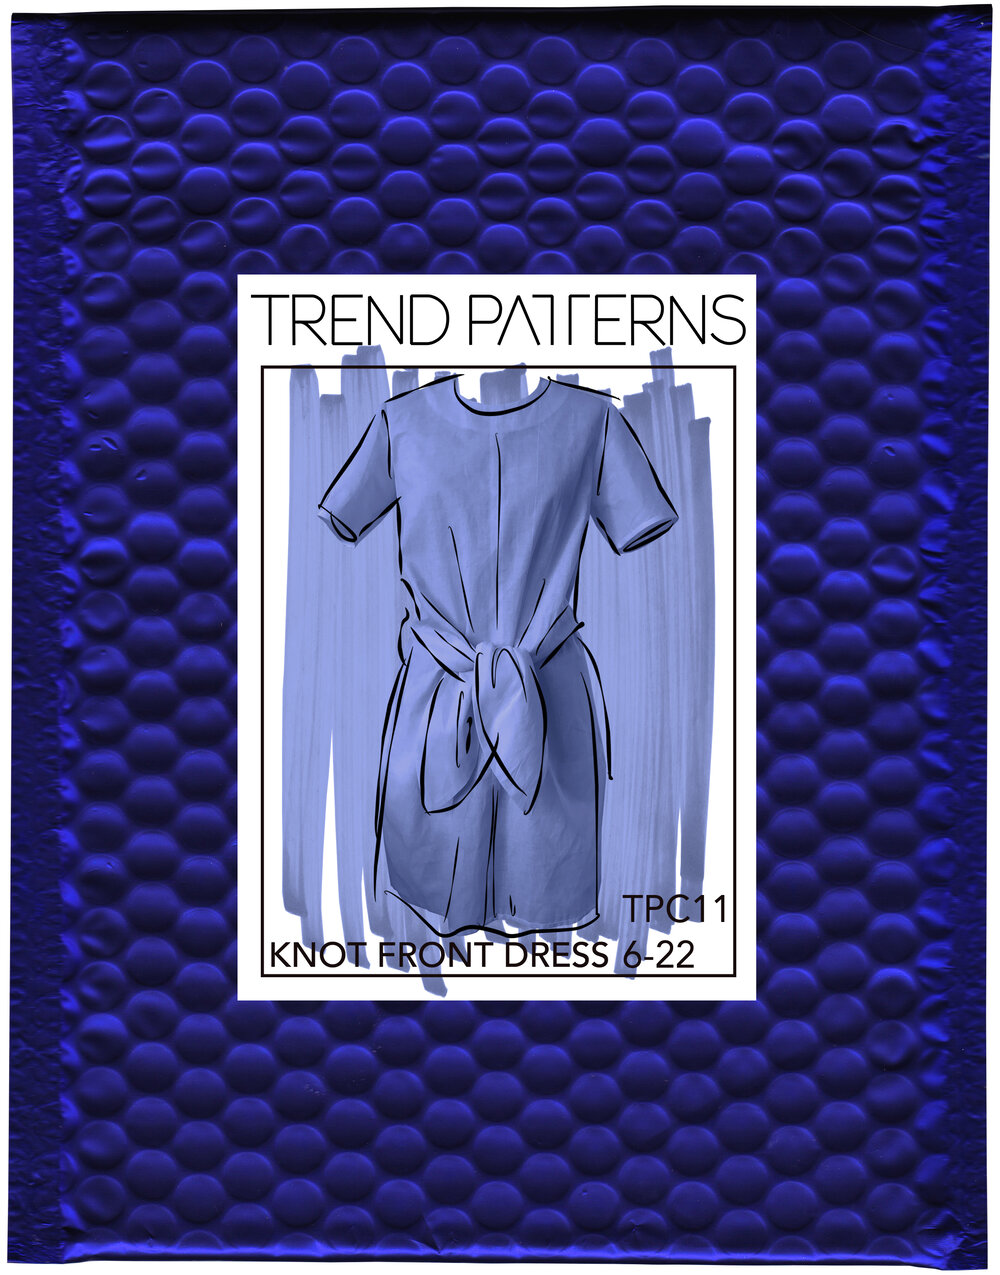 TPC11//KNOT FRONT DRESS — TREND PATTERNS